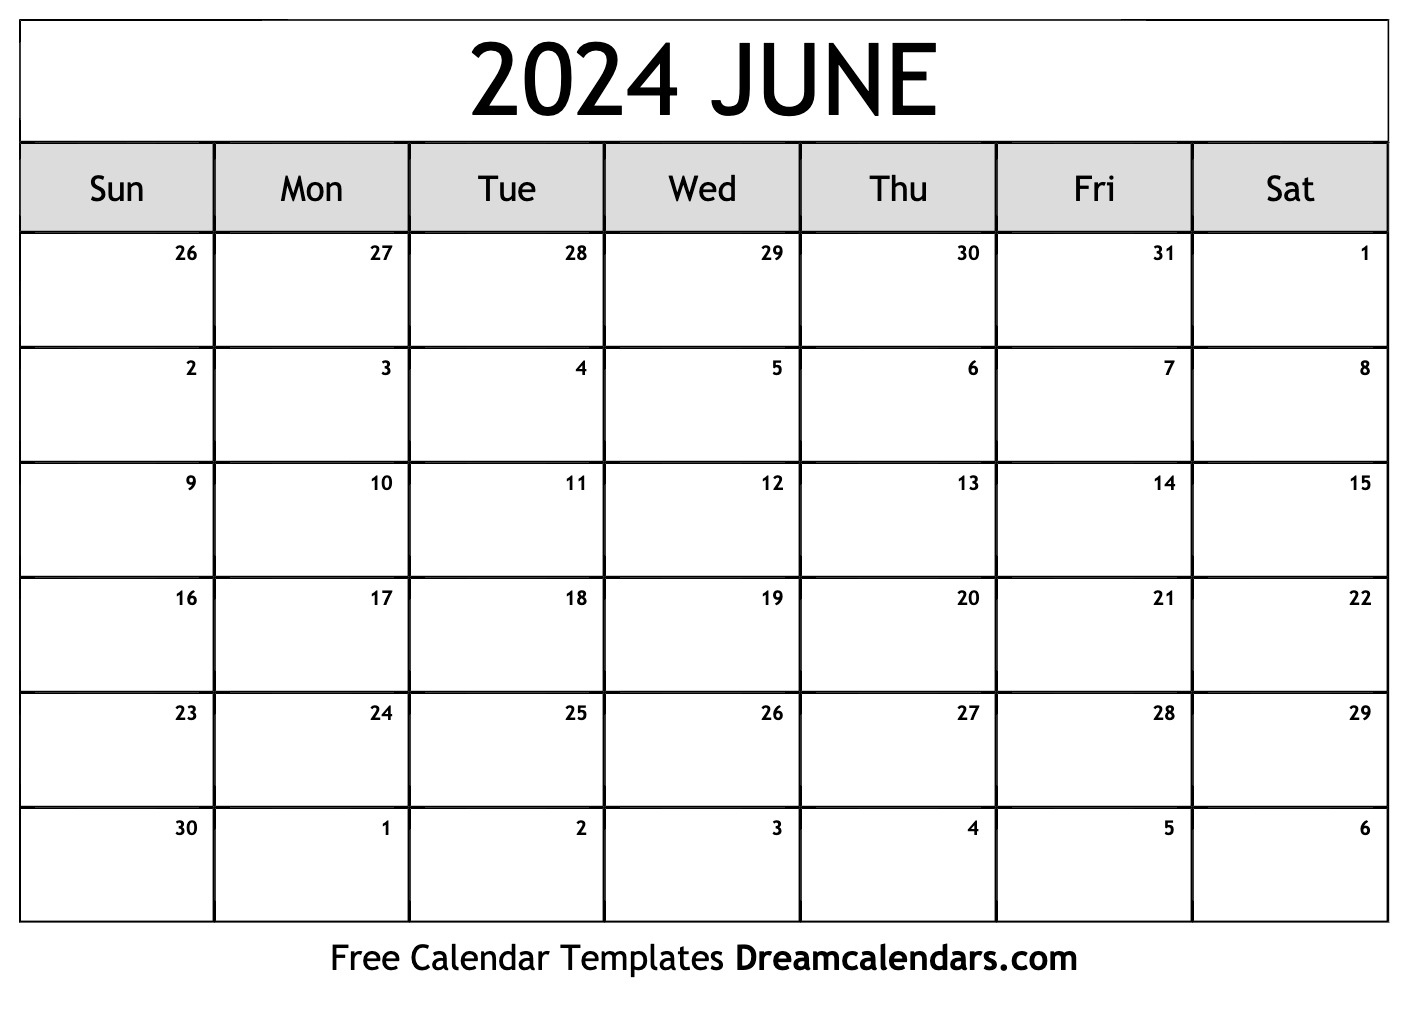 June 2024 Calendar | Free Blank Printable With Holidays | Printable Calendar 2024 June